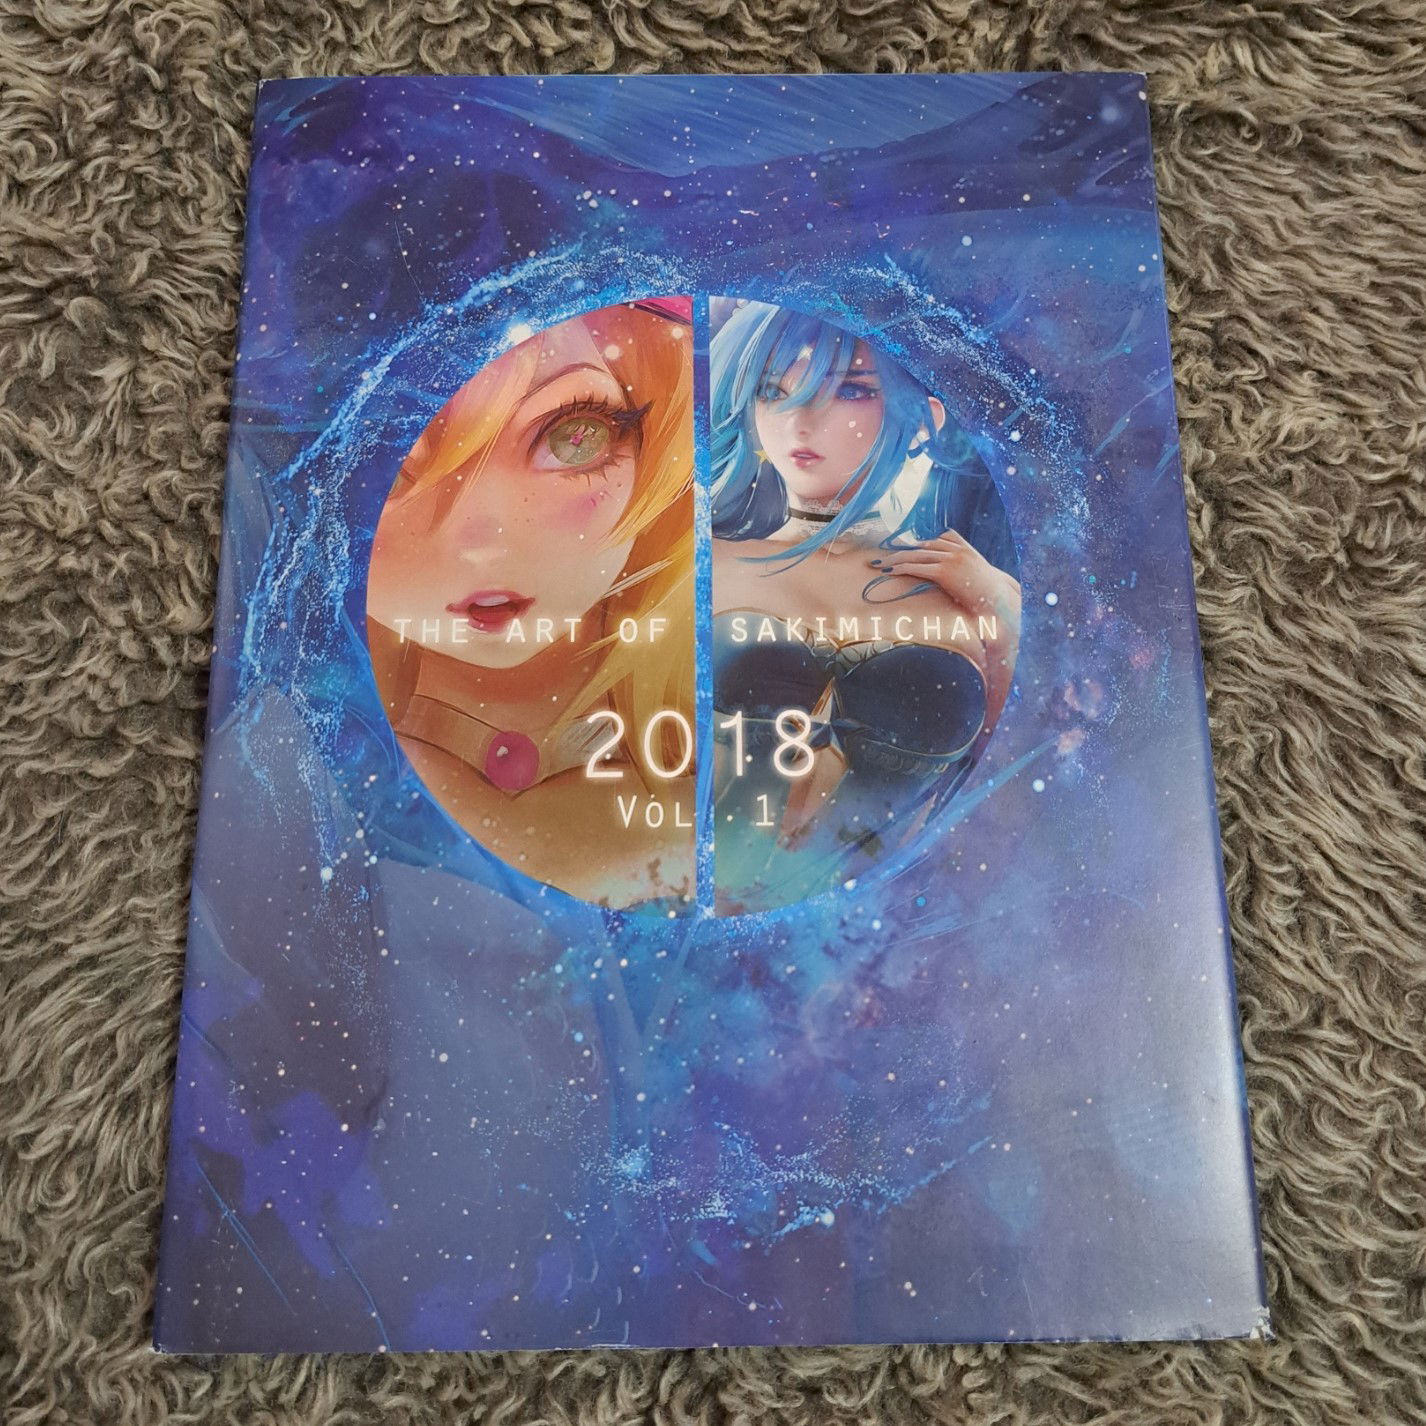 Art of Sakimichan 2018 Vol 1 Hardcover